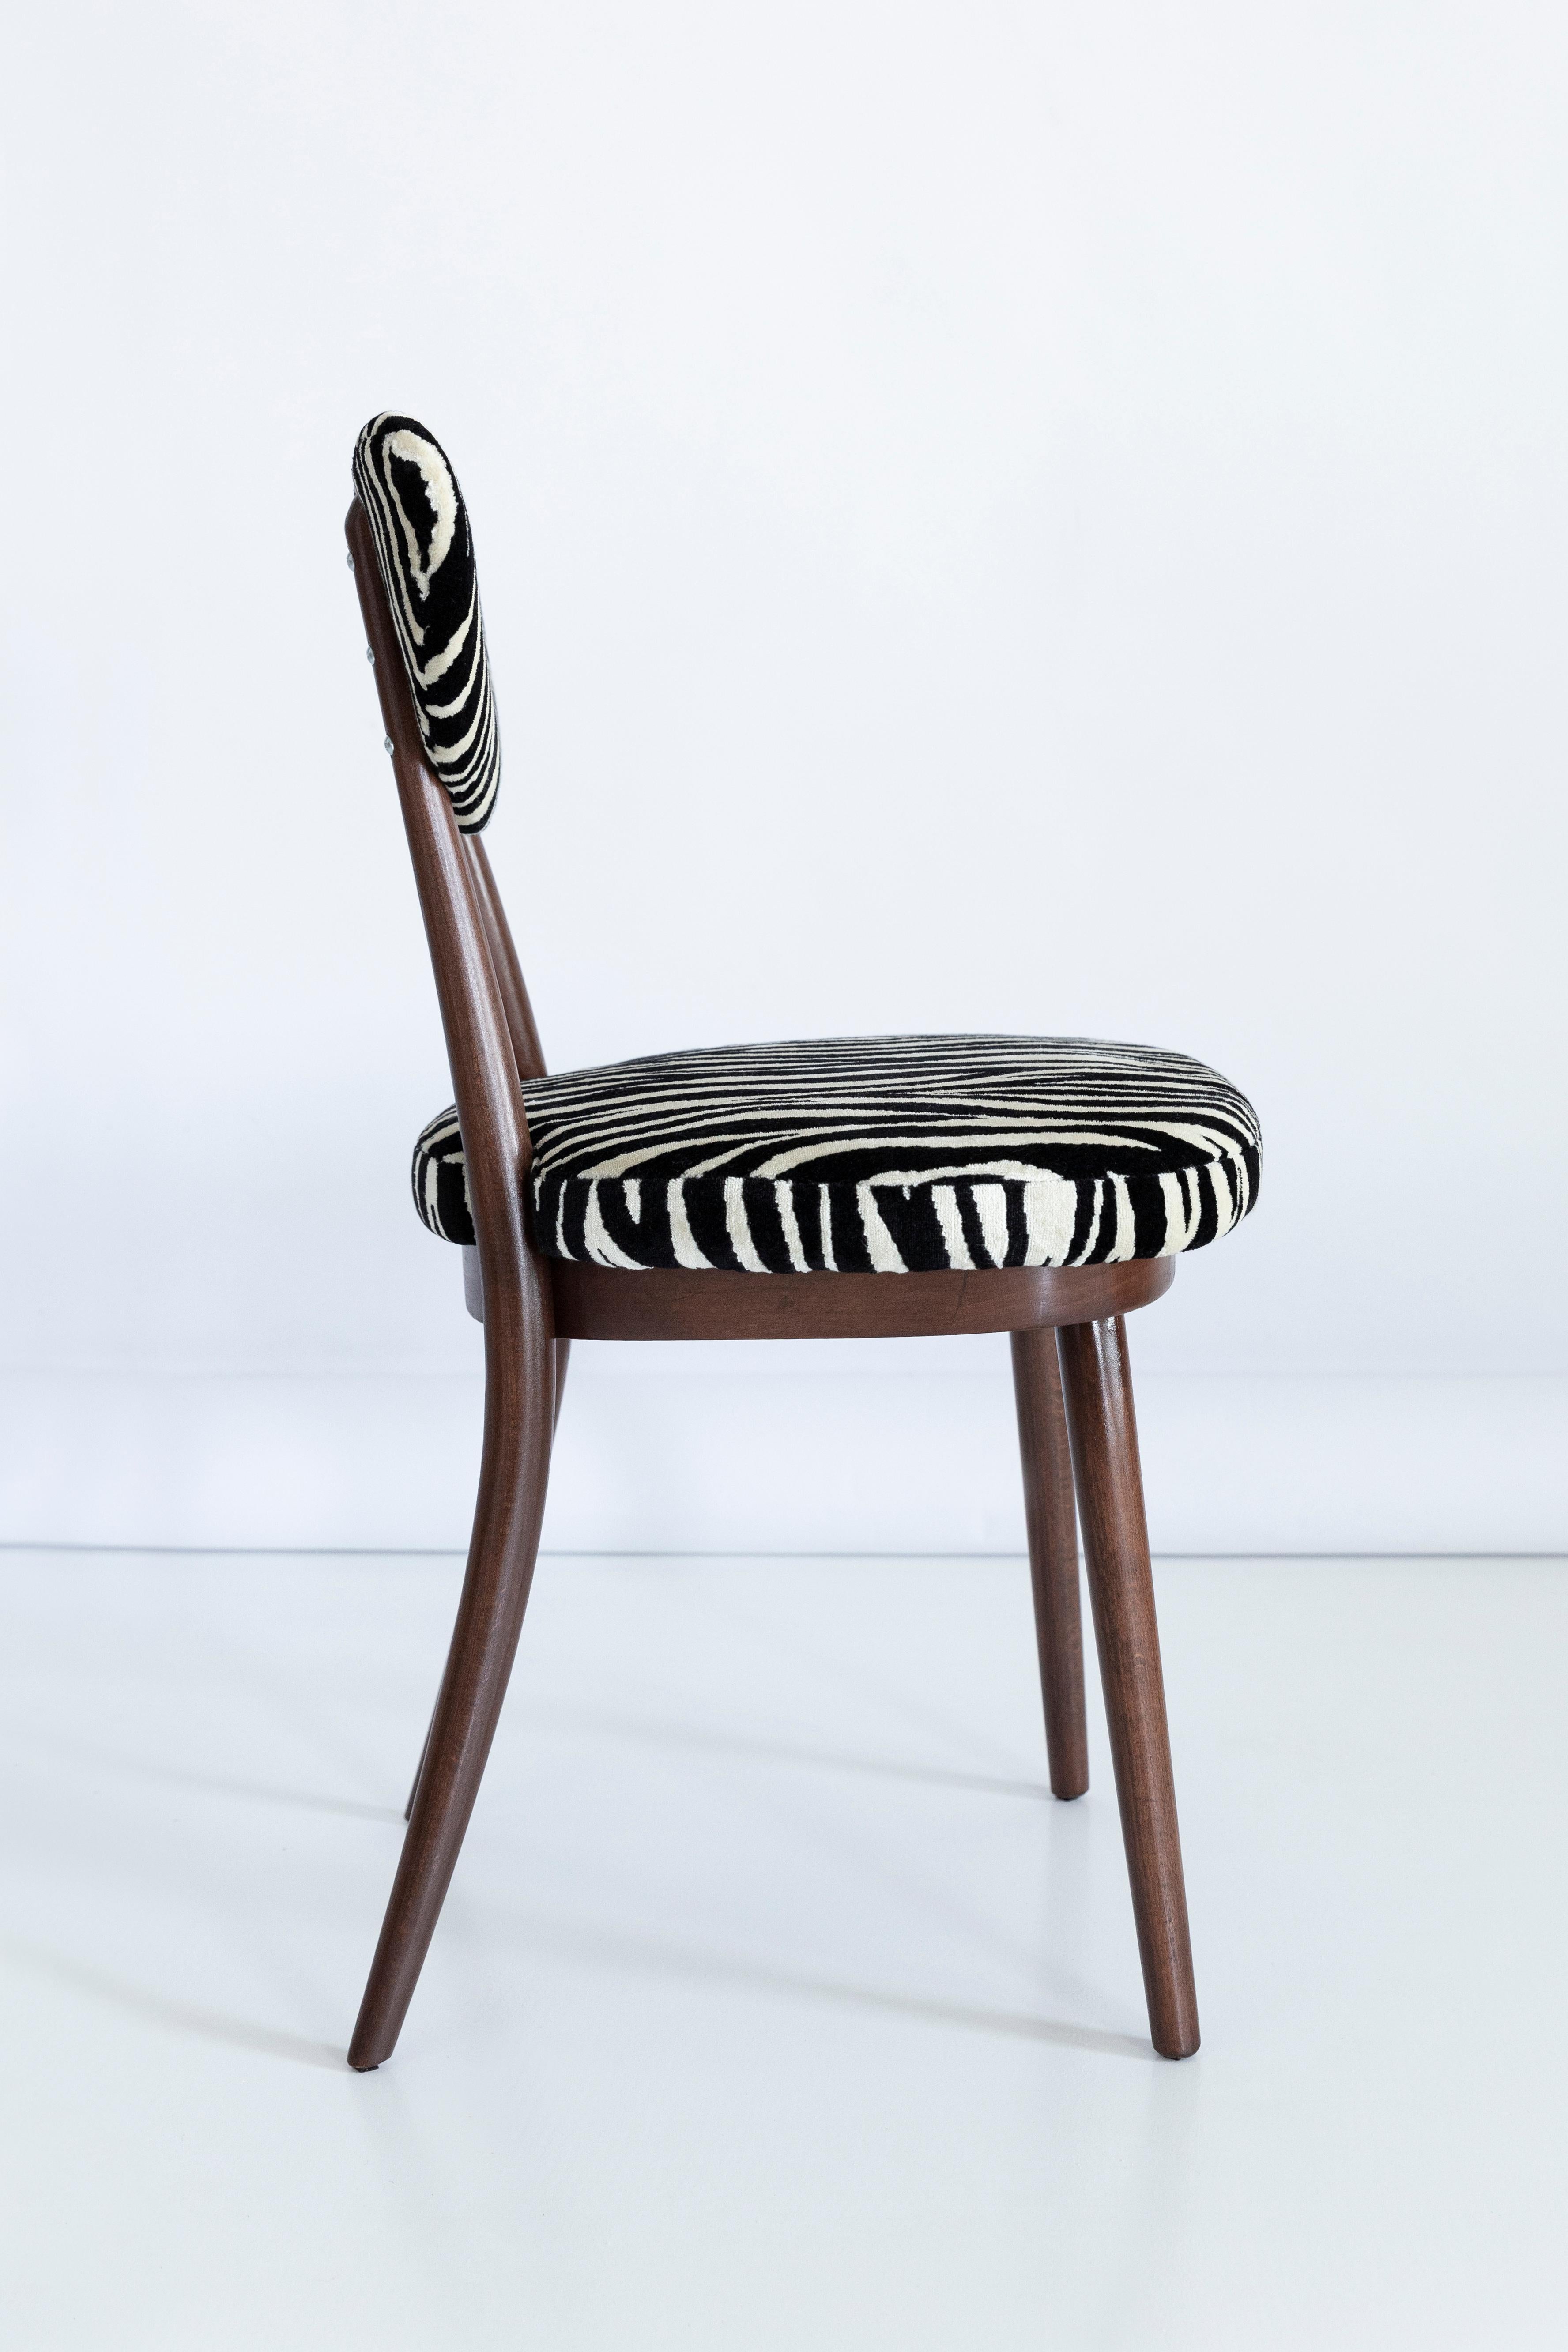 Set Midcentury Zebra Black White Heart Chairs, Hollywood Regency, Poland, 1960s For Sale 9